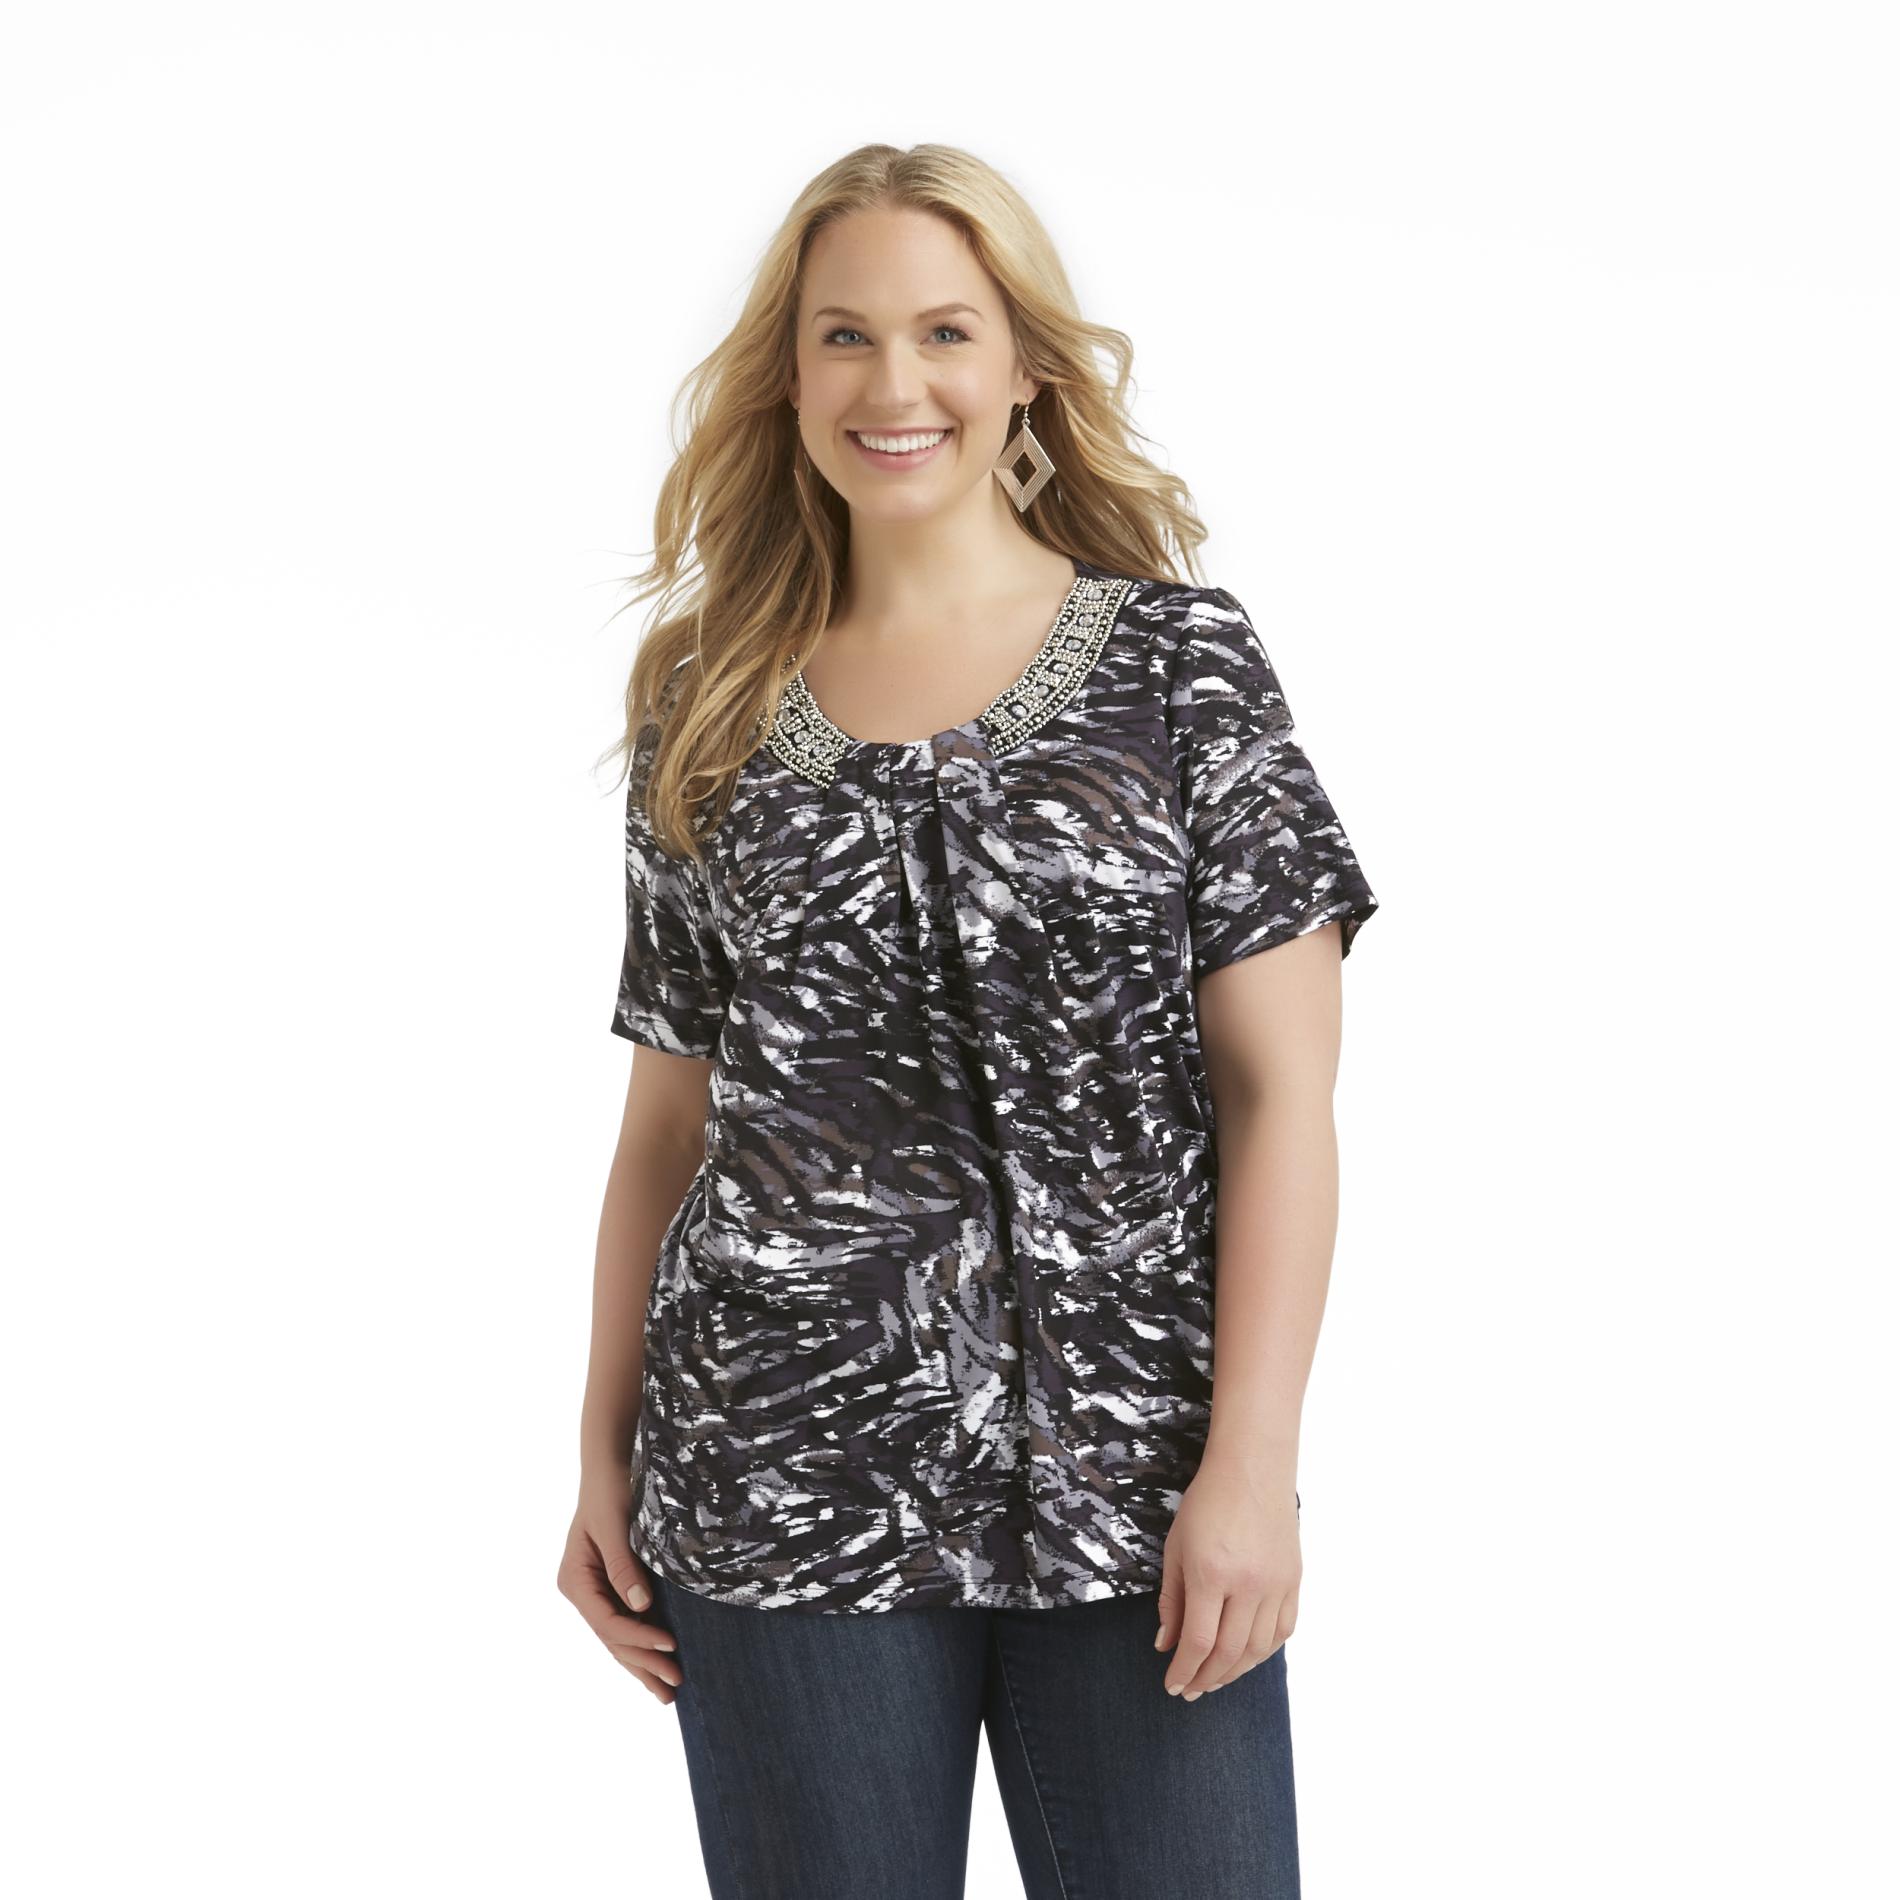 Jaclyn Smith Women's Plus Embellished Scoop Neck Shirt